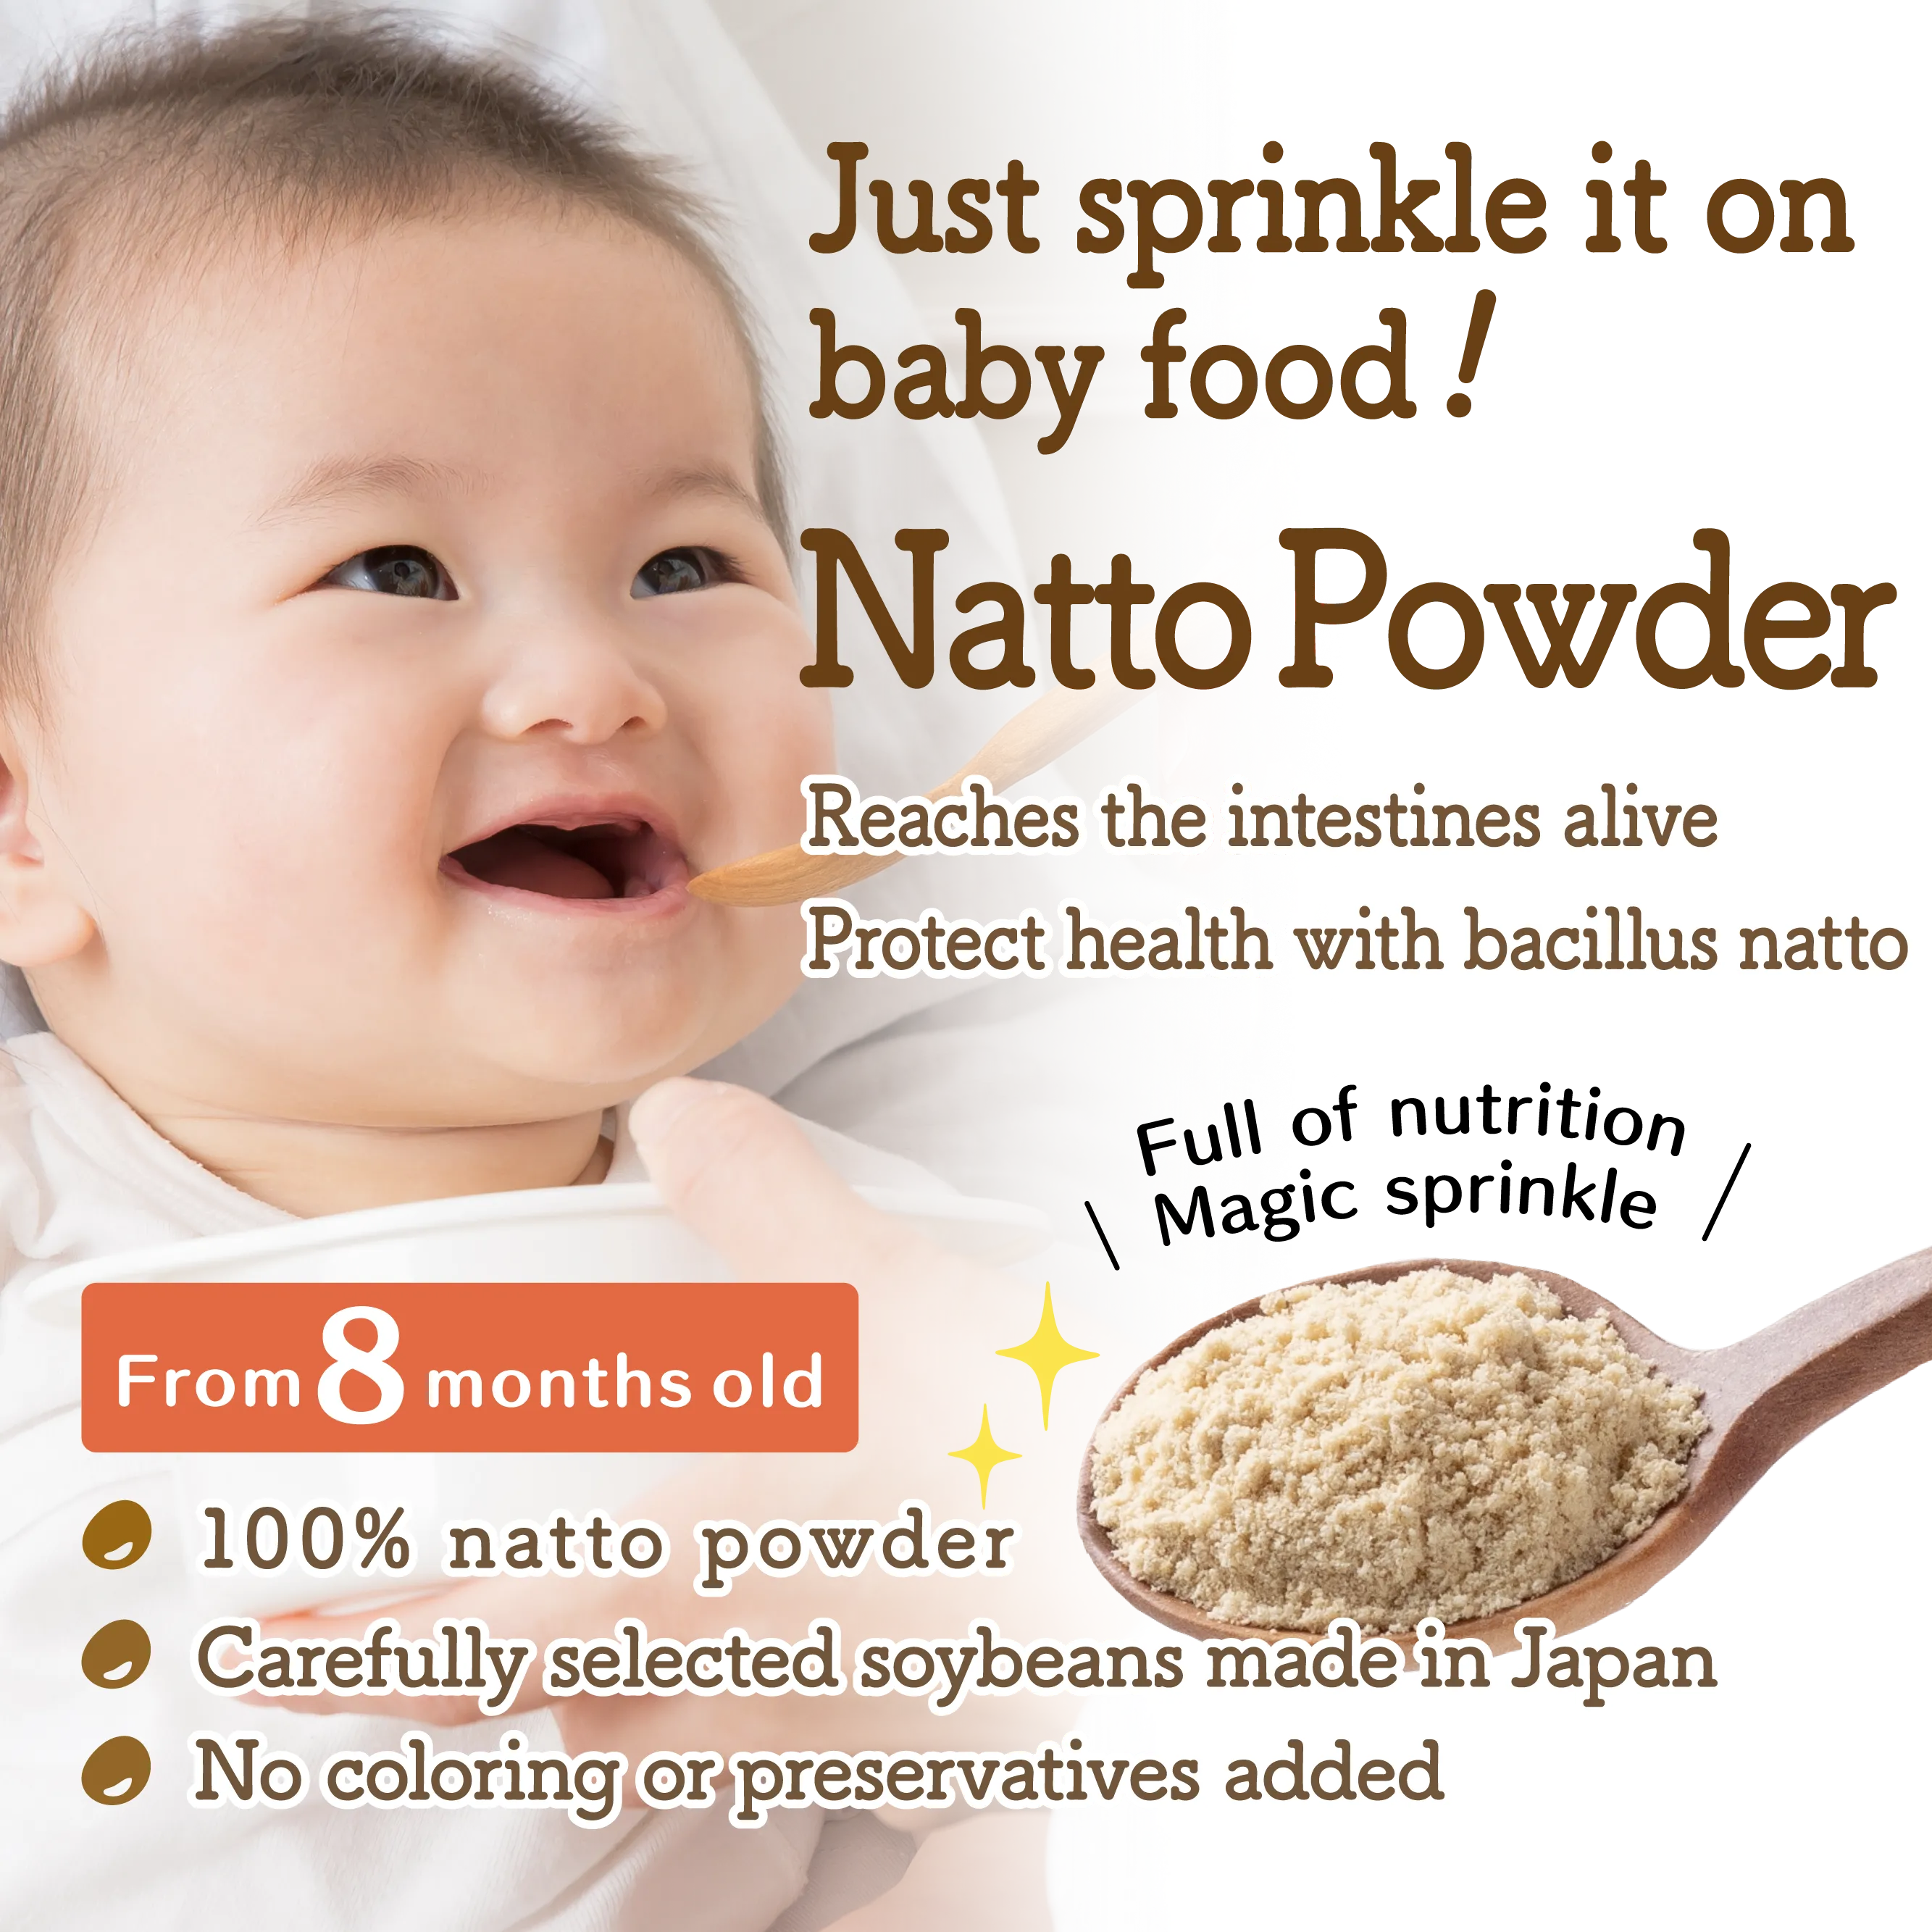 Just put it on baby food! Natto powder